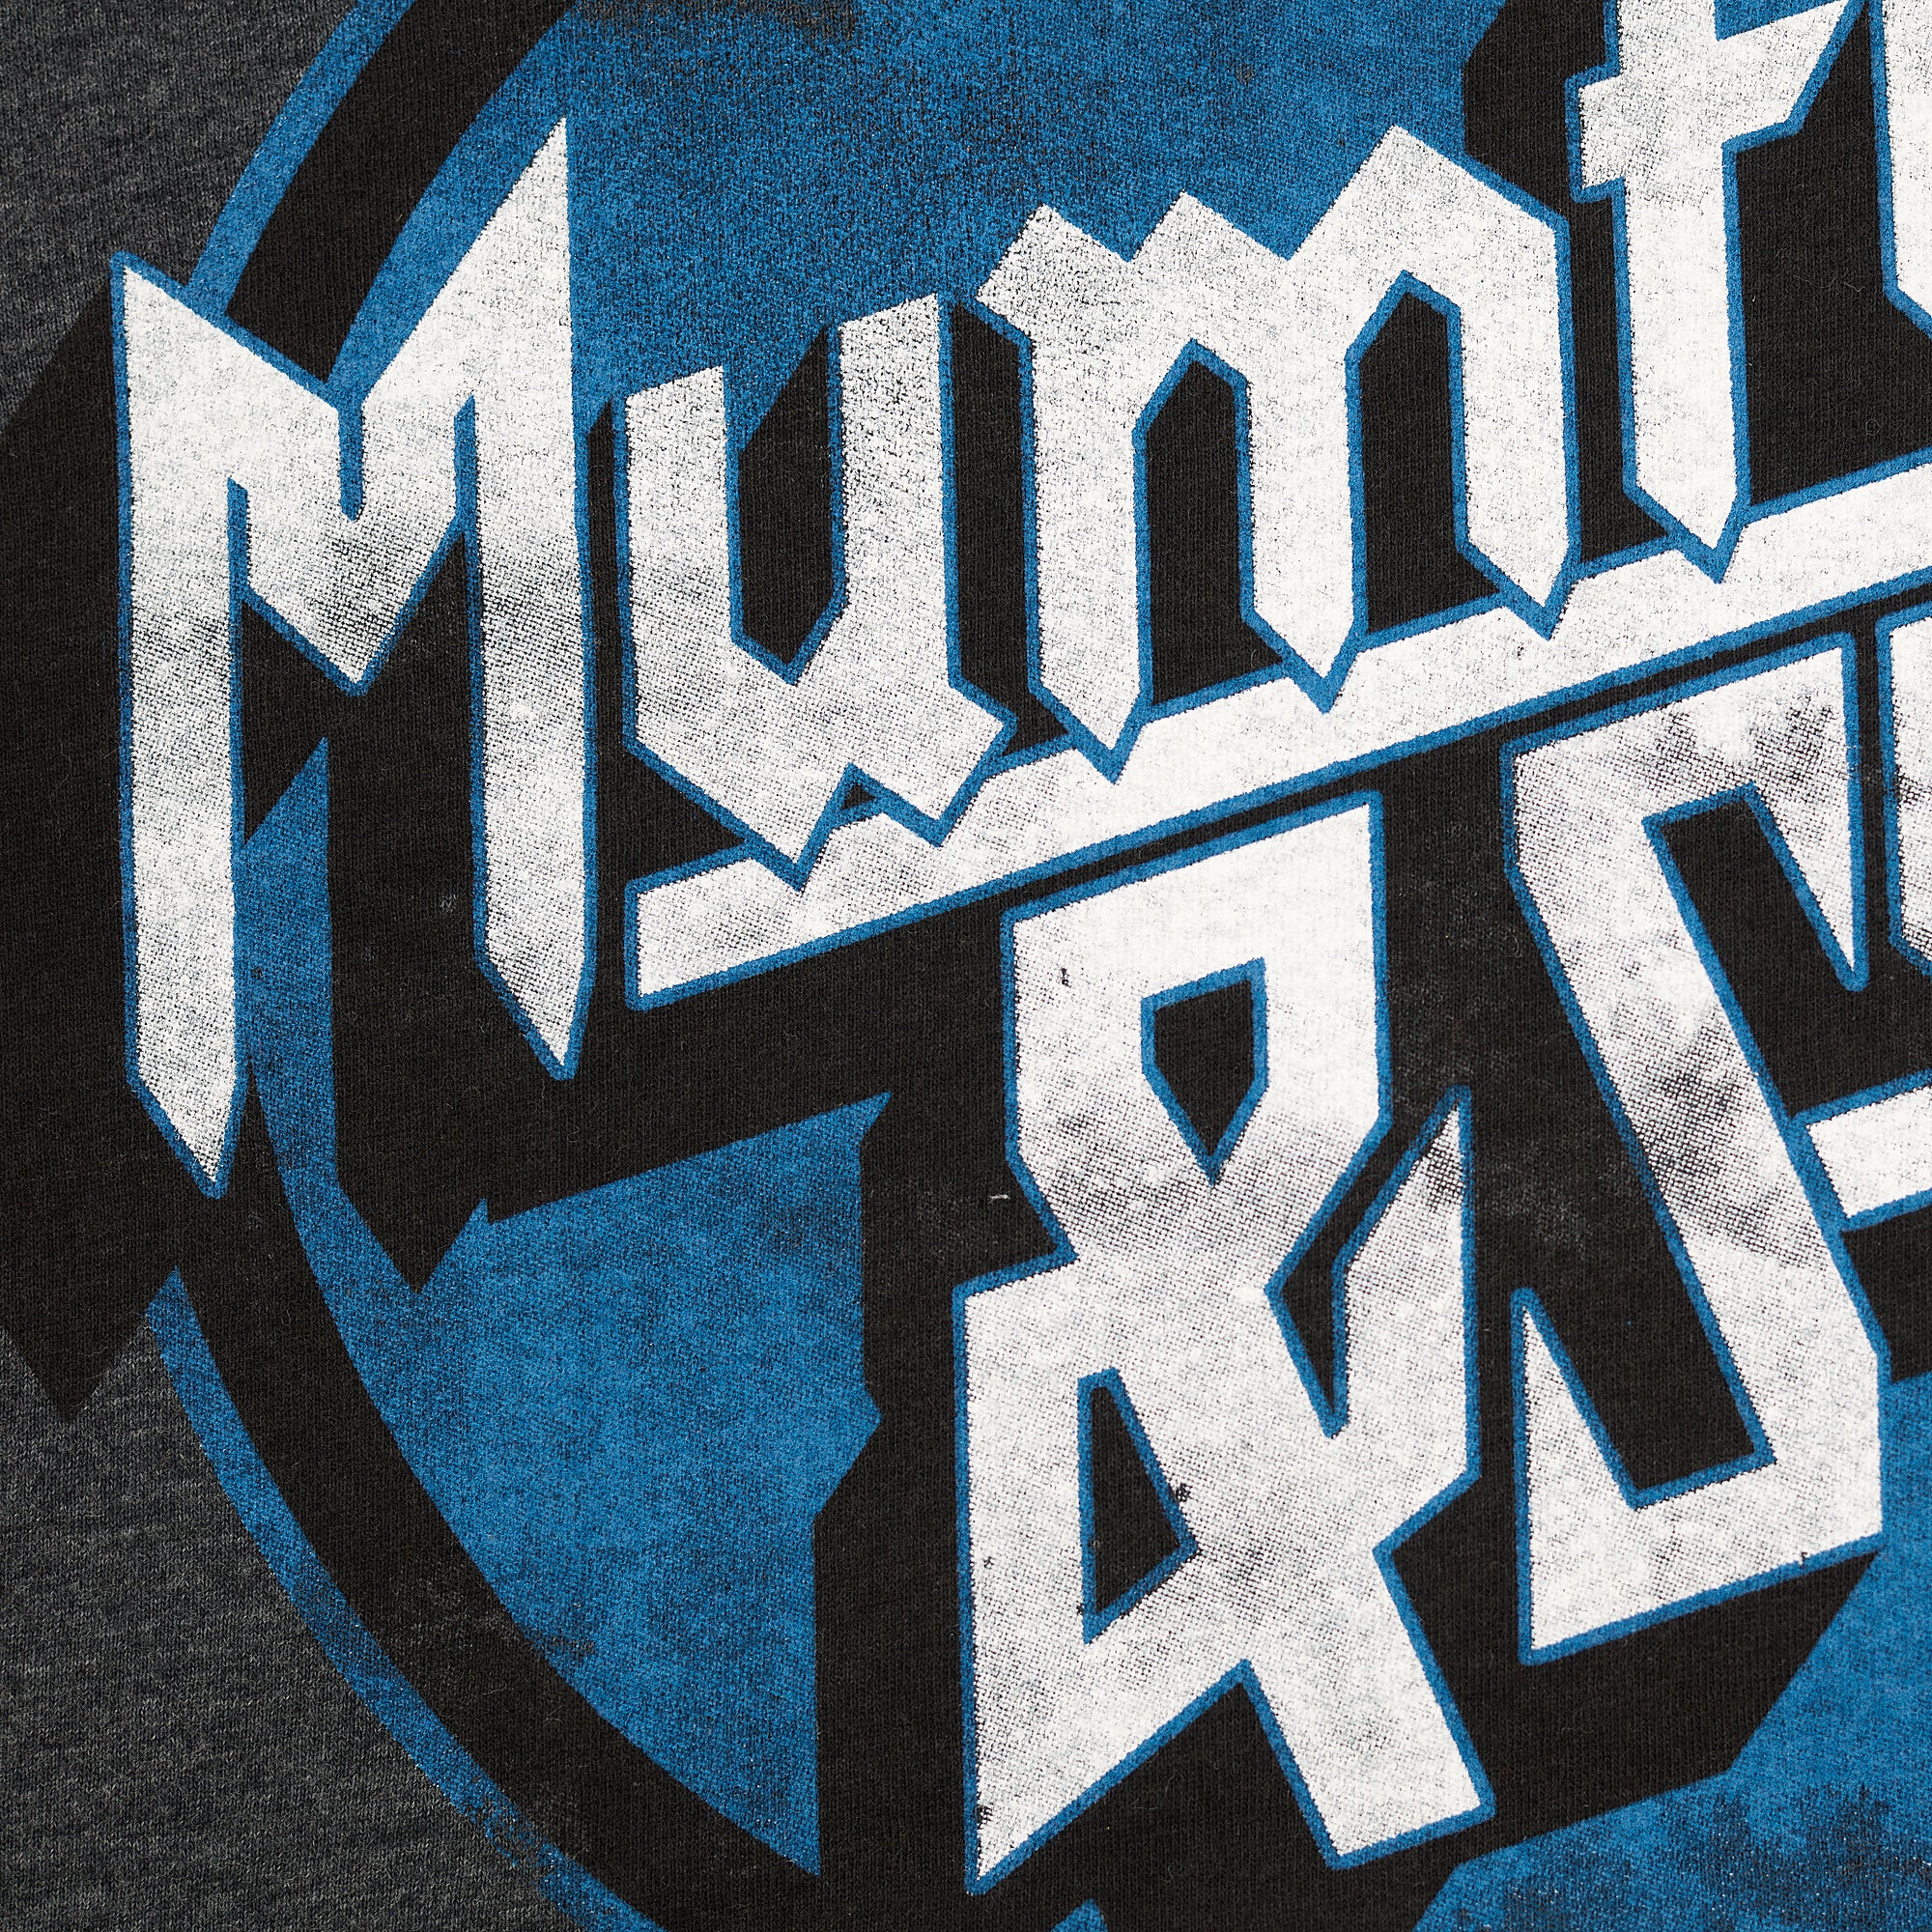 Mumford & Sons  - Grey Classic Logo Blue Print Raglan T-shirt